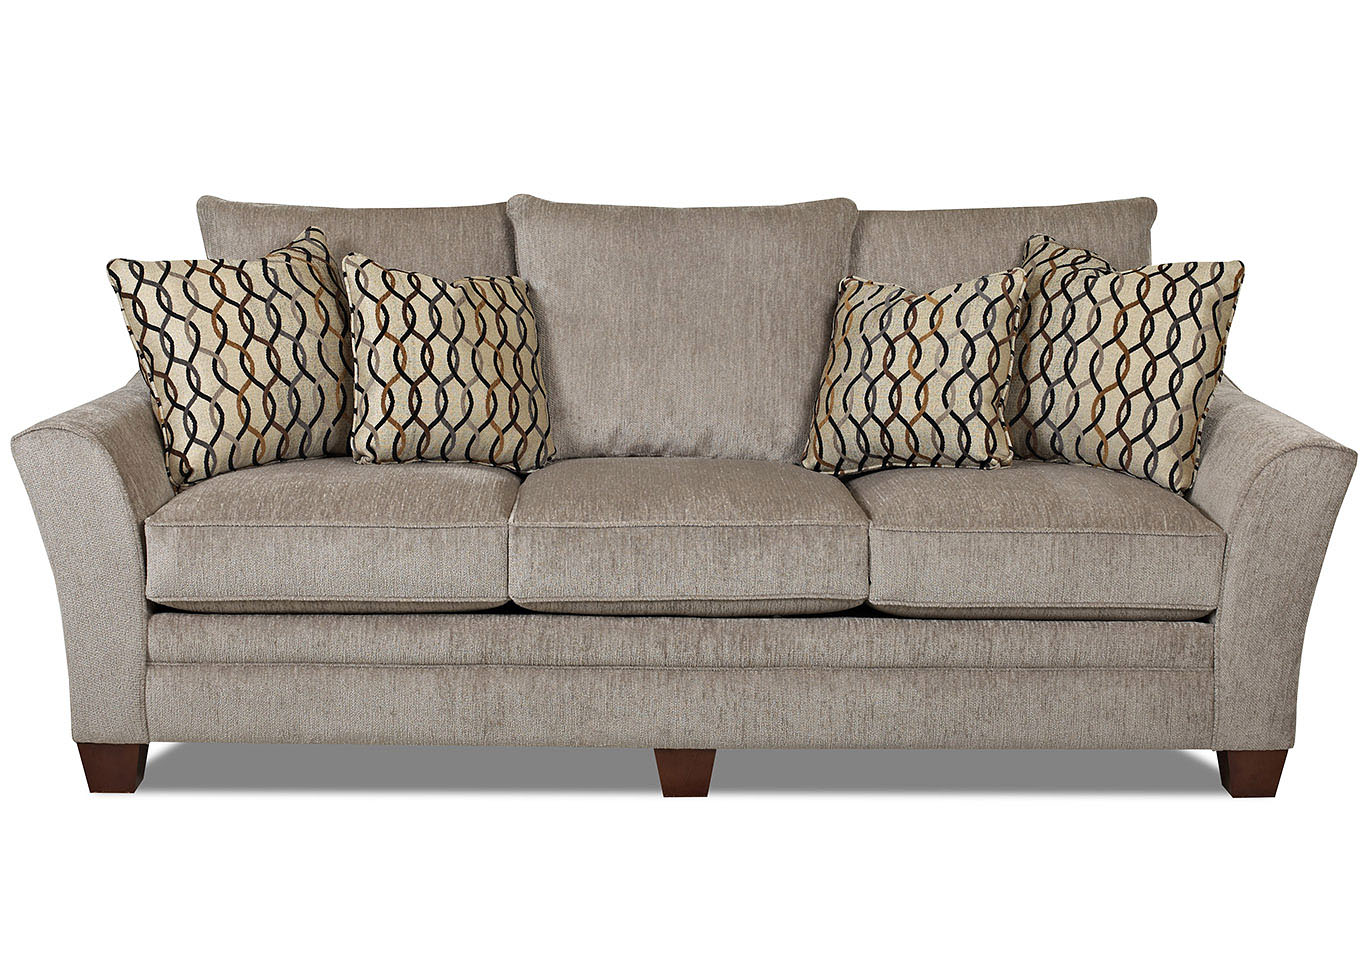 Posen Ash Stationary Fabric Sofa,Klaussner Home Furnishings